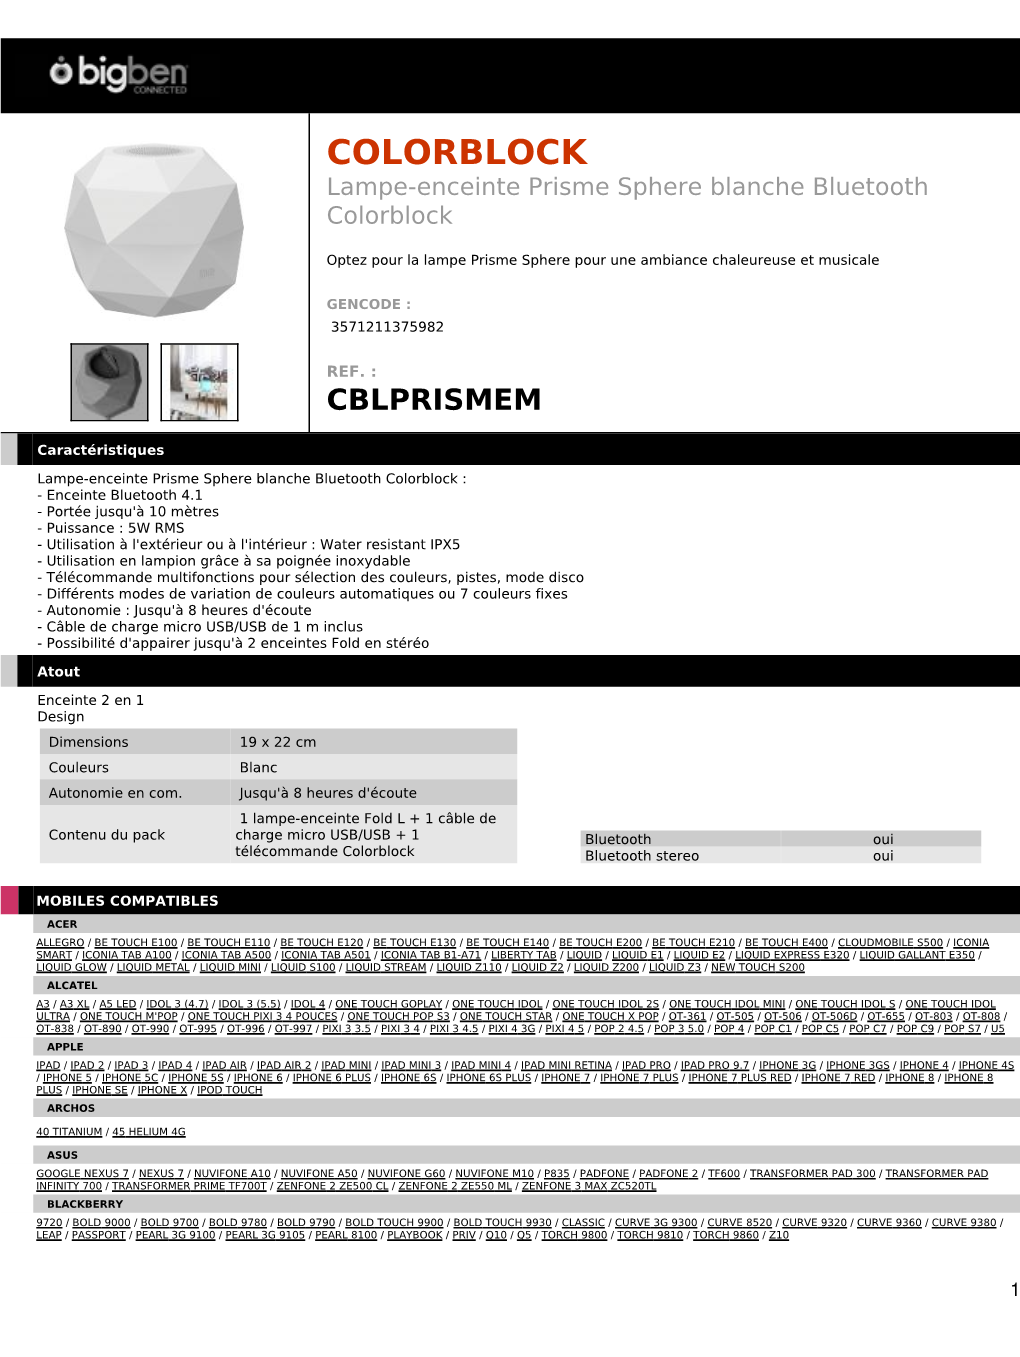 COLORBLOCK Lampe-Enceinte Prisme Sphere Blanche Bluetooth Colorblock